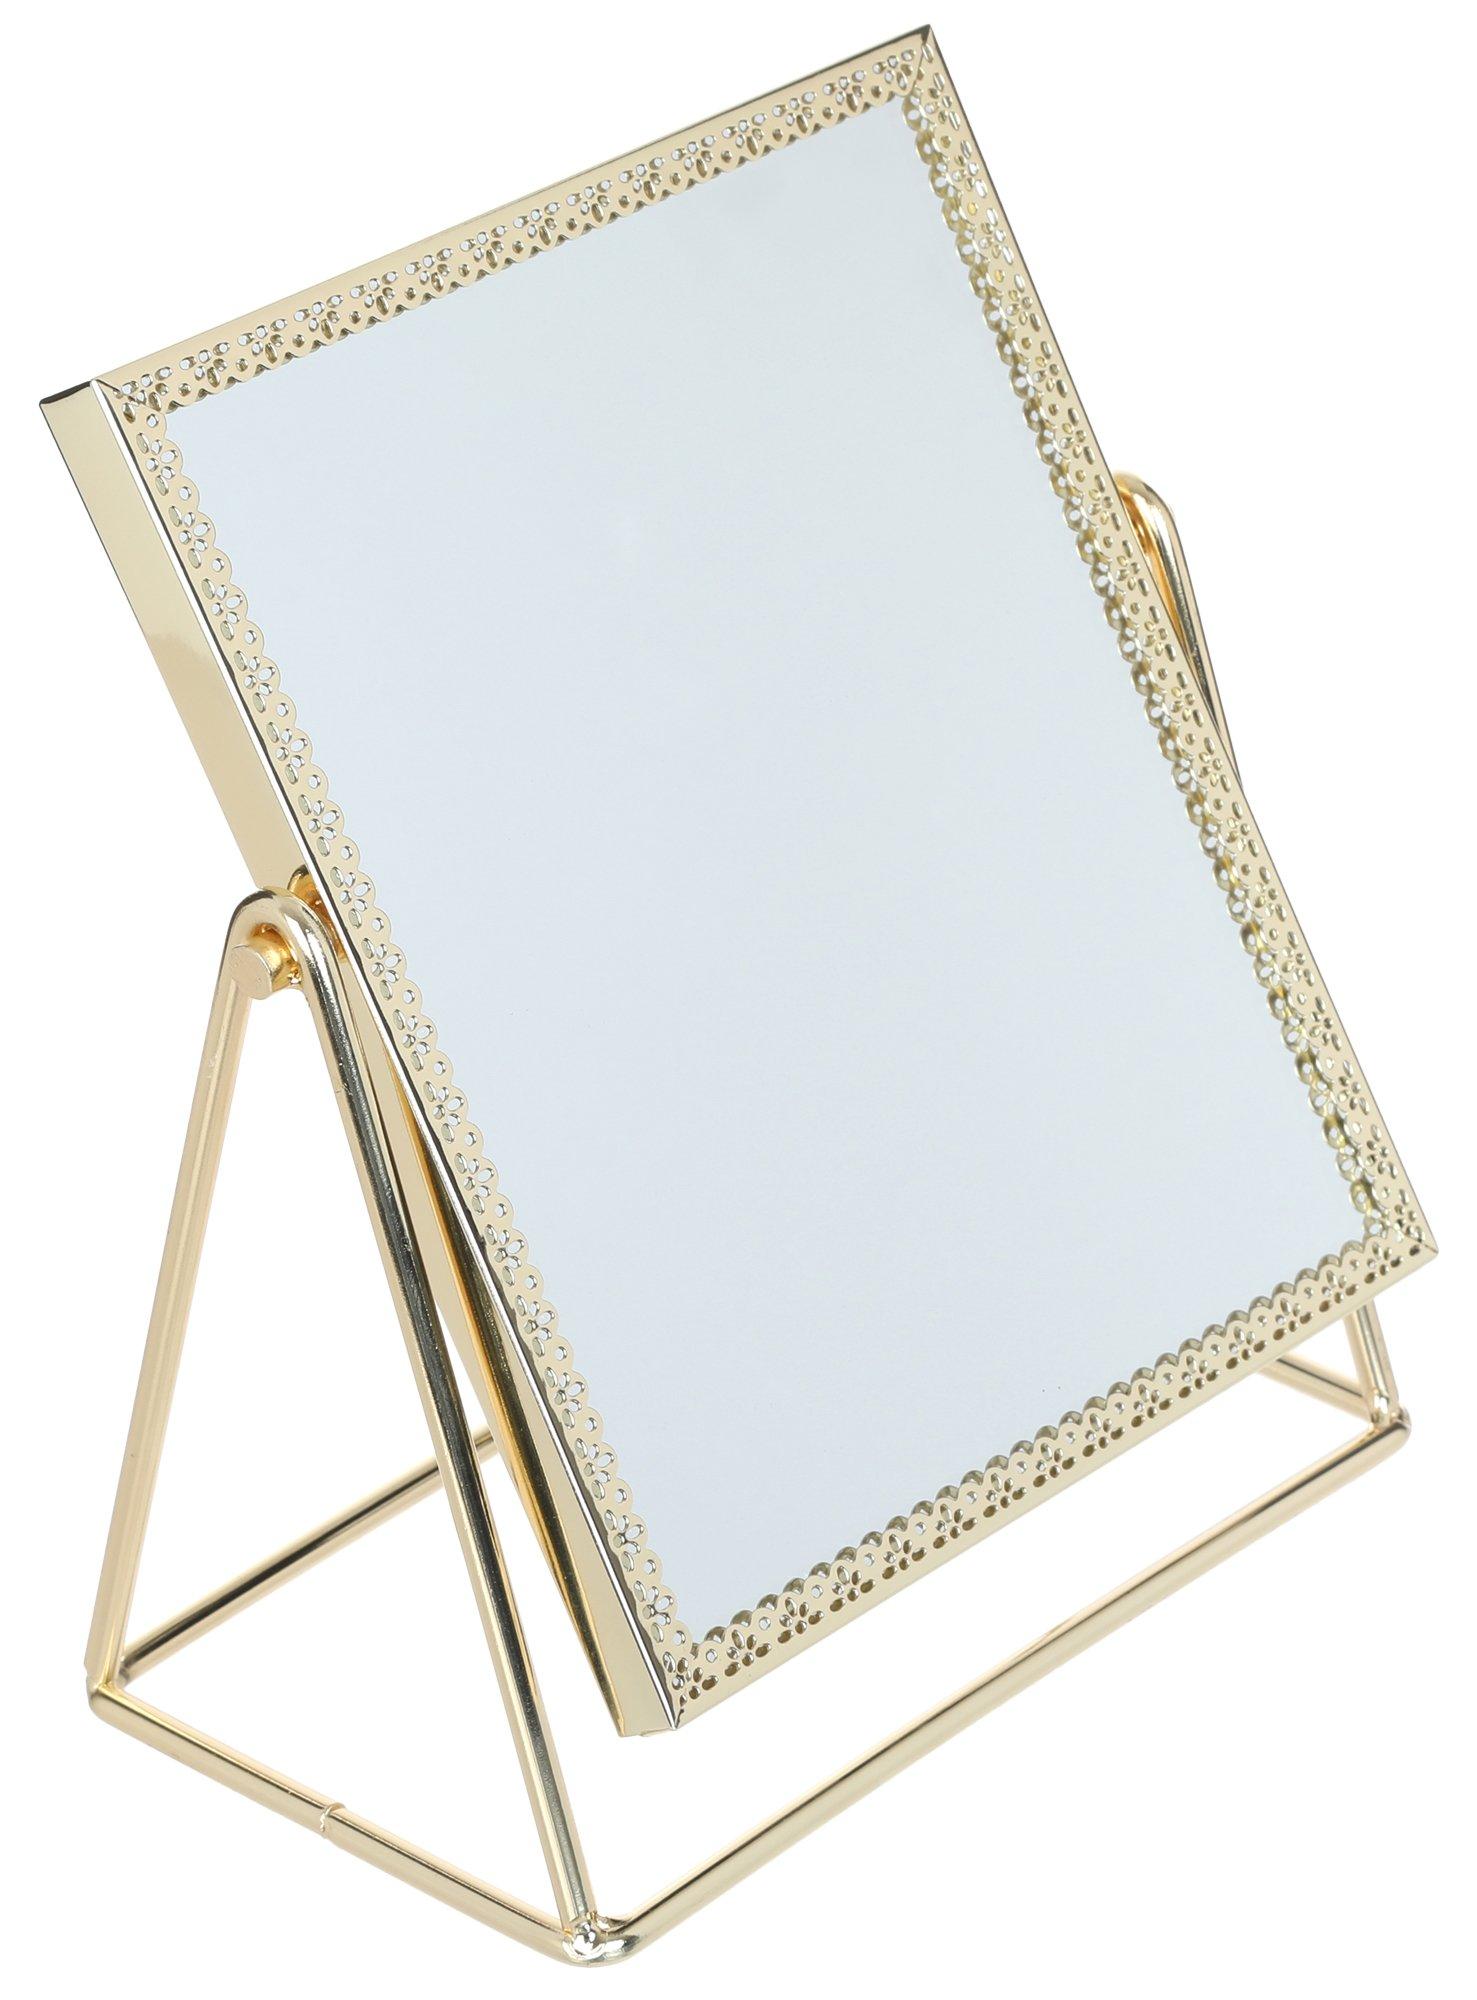 7x6 Metal Lace Swing Mirror Frame